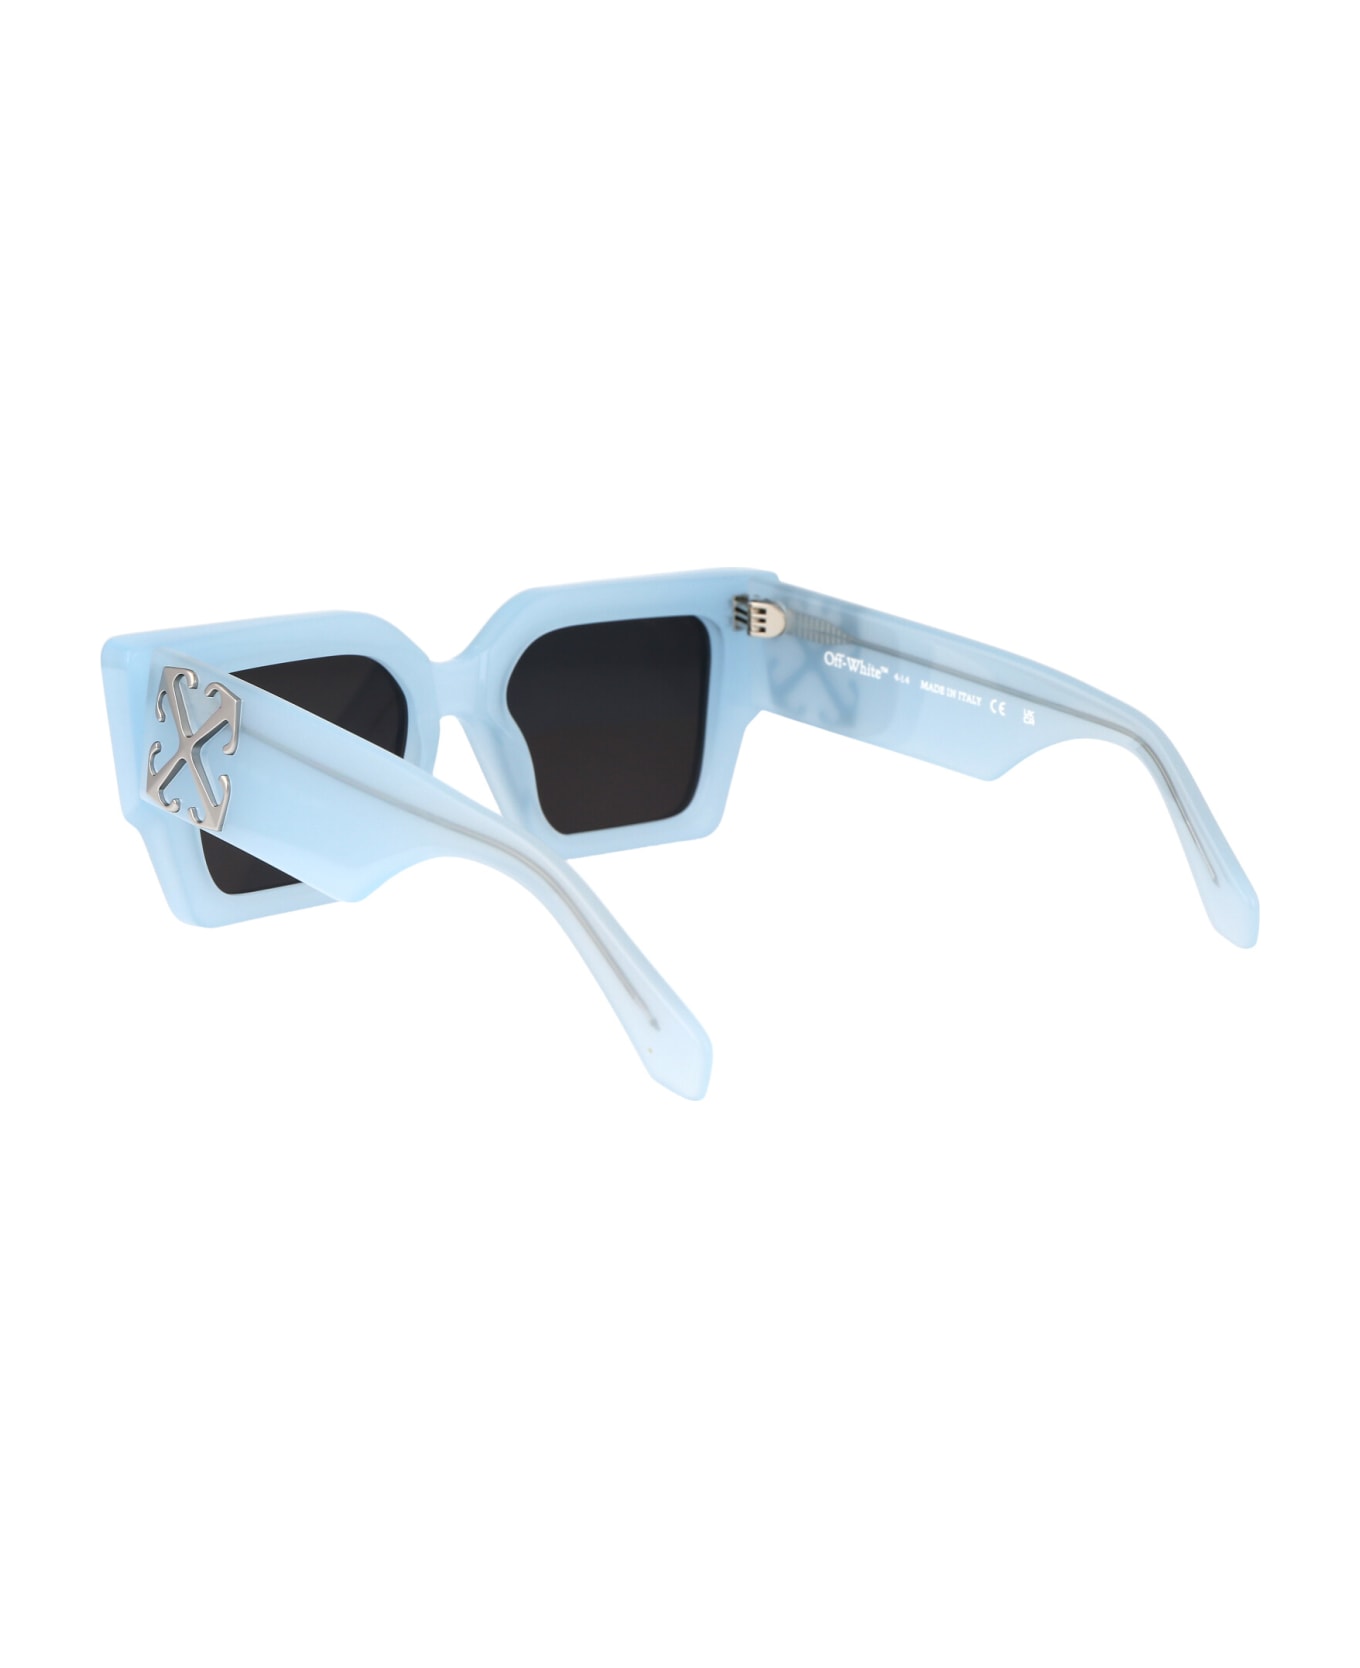 Off-White Catalina Sunglasses - 4007 LIGHT BLUE